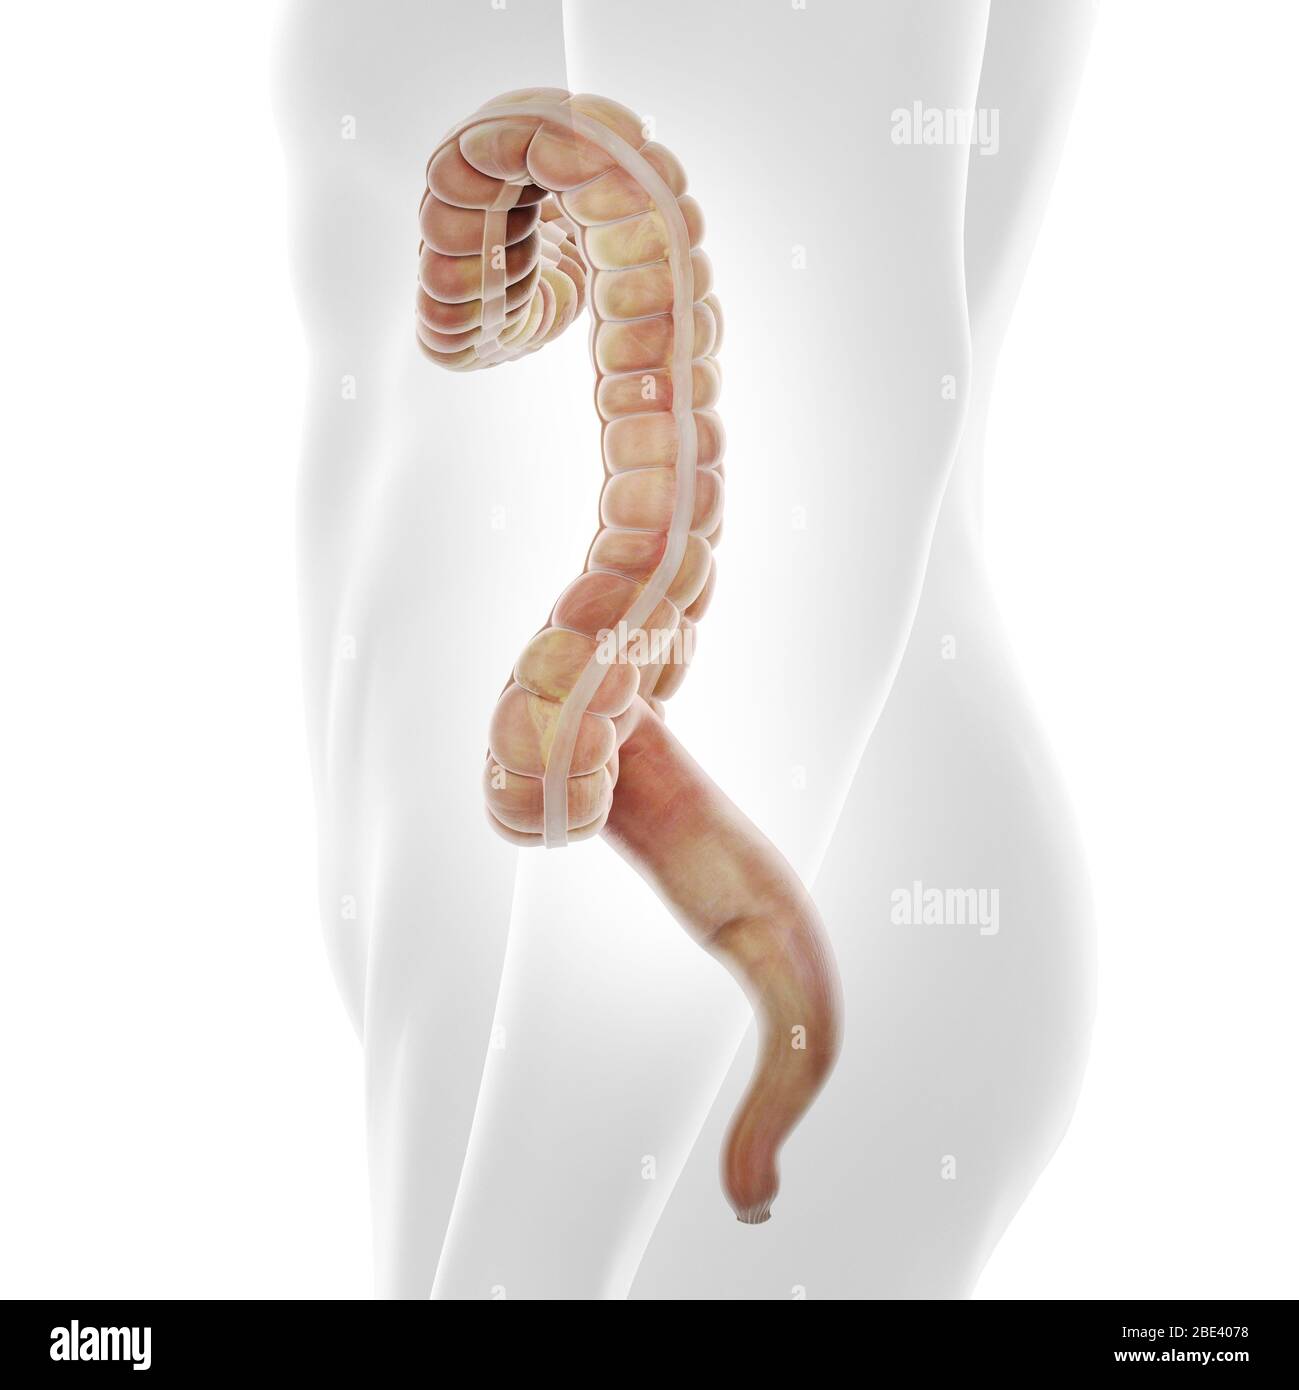 Human colon, illustration. Stock Photo